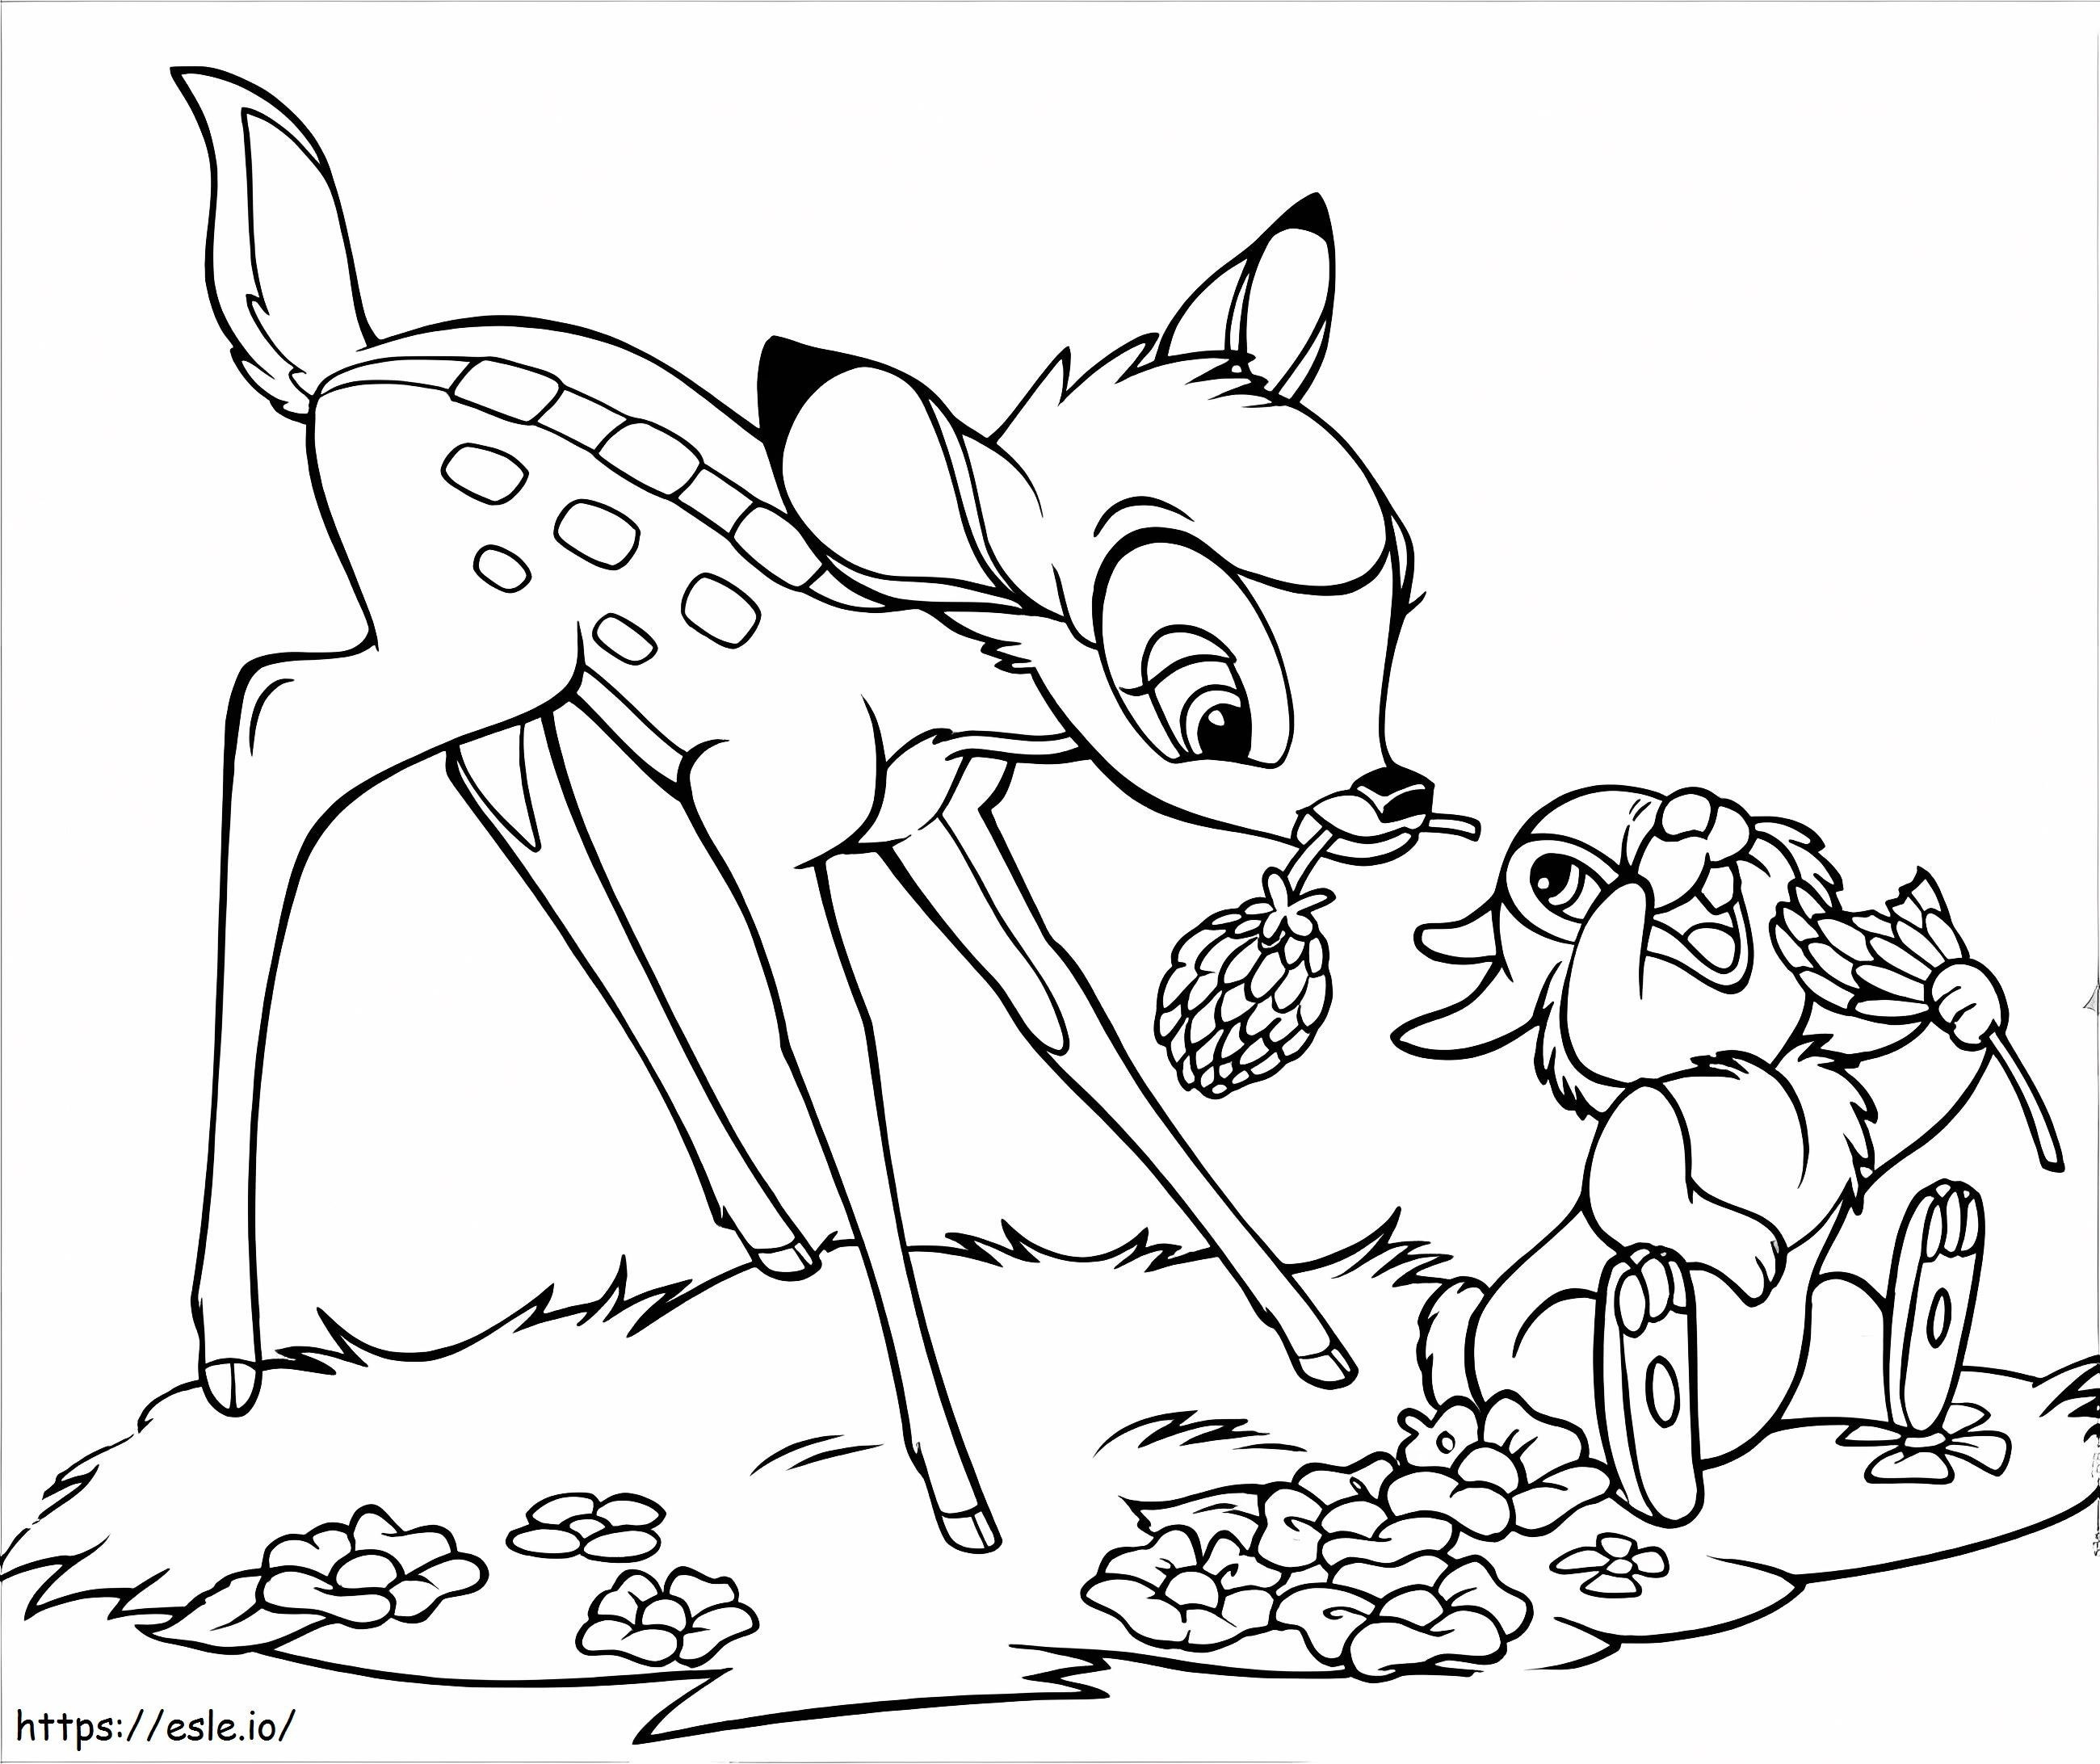 Bambi ve Thumper Yeme boyama